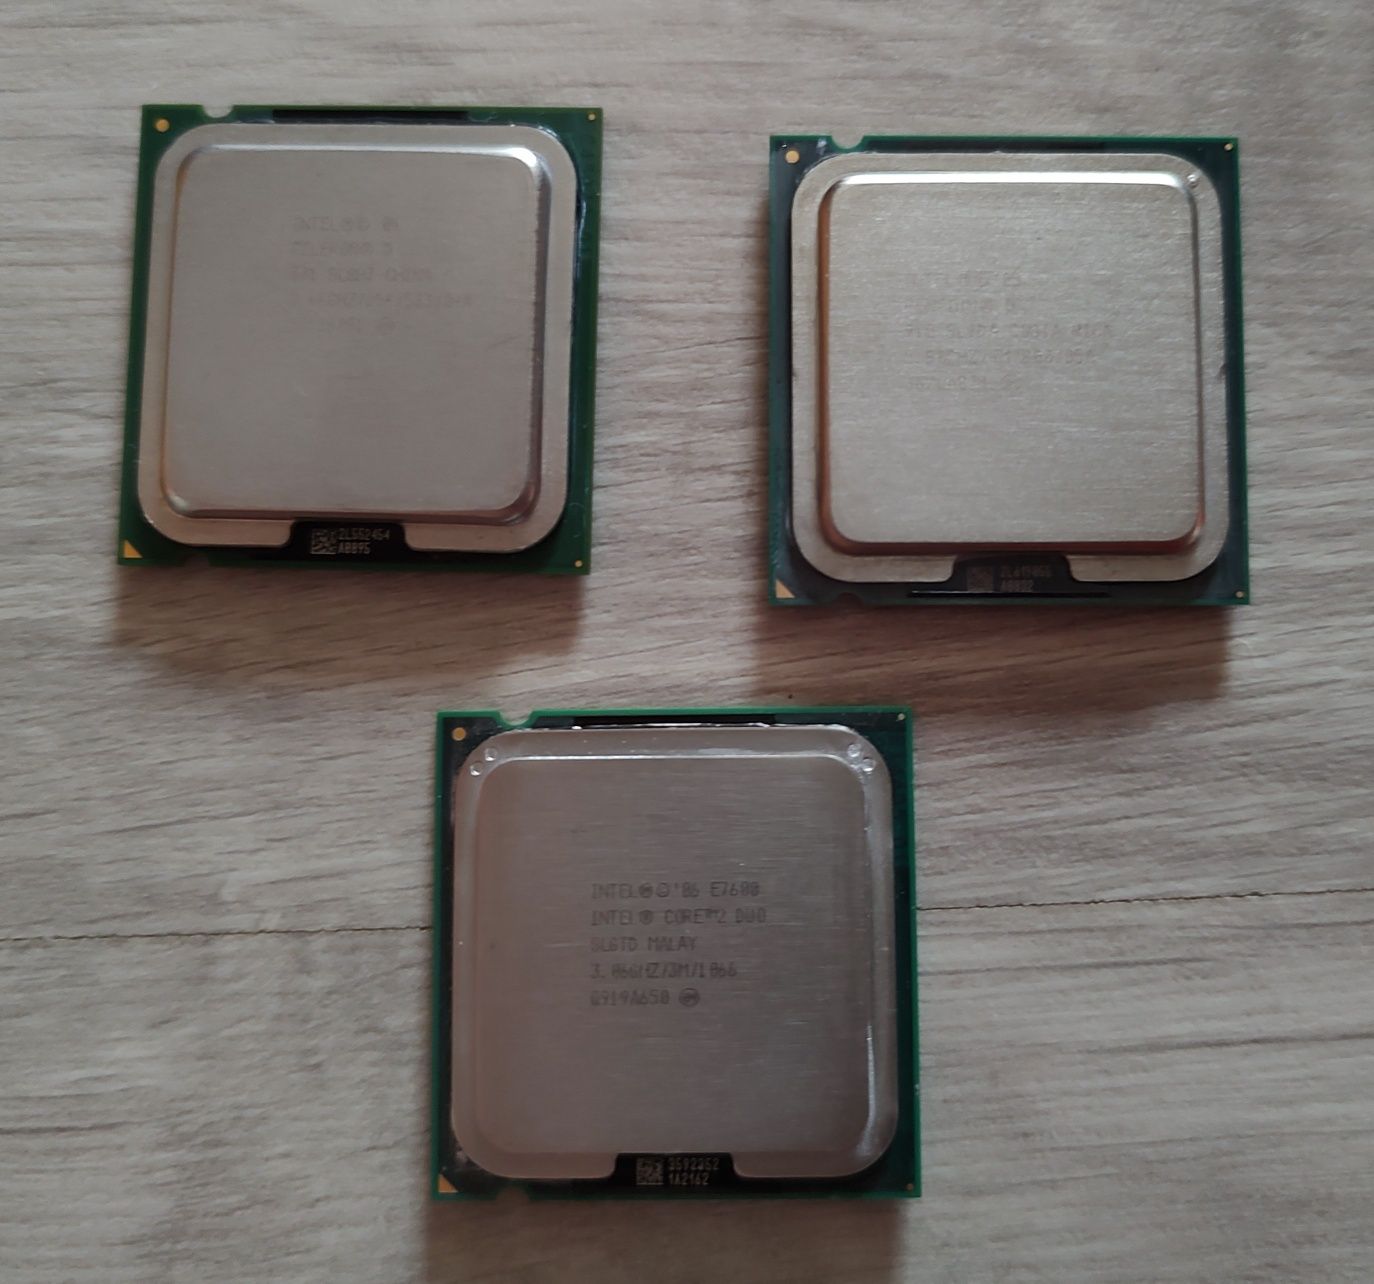 Процессор Intel q9400, 2.66ghz, 4 ядра сокет 775